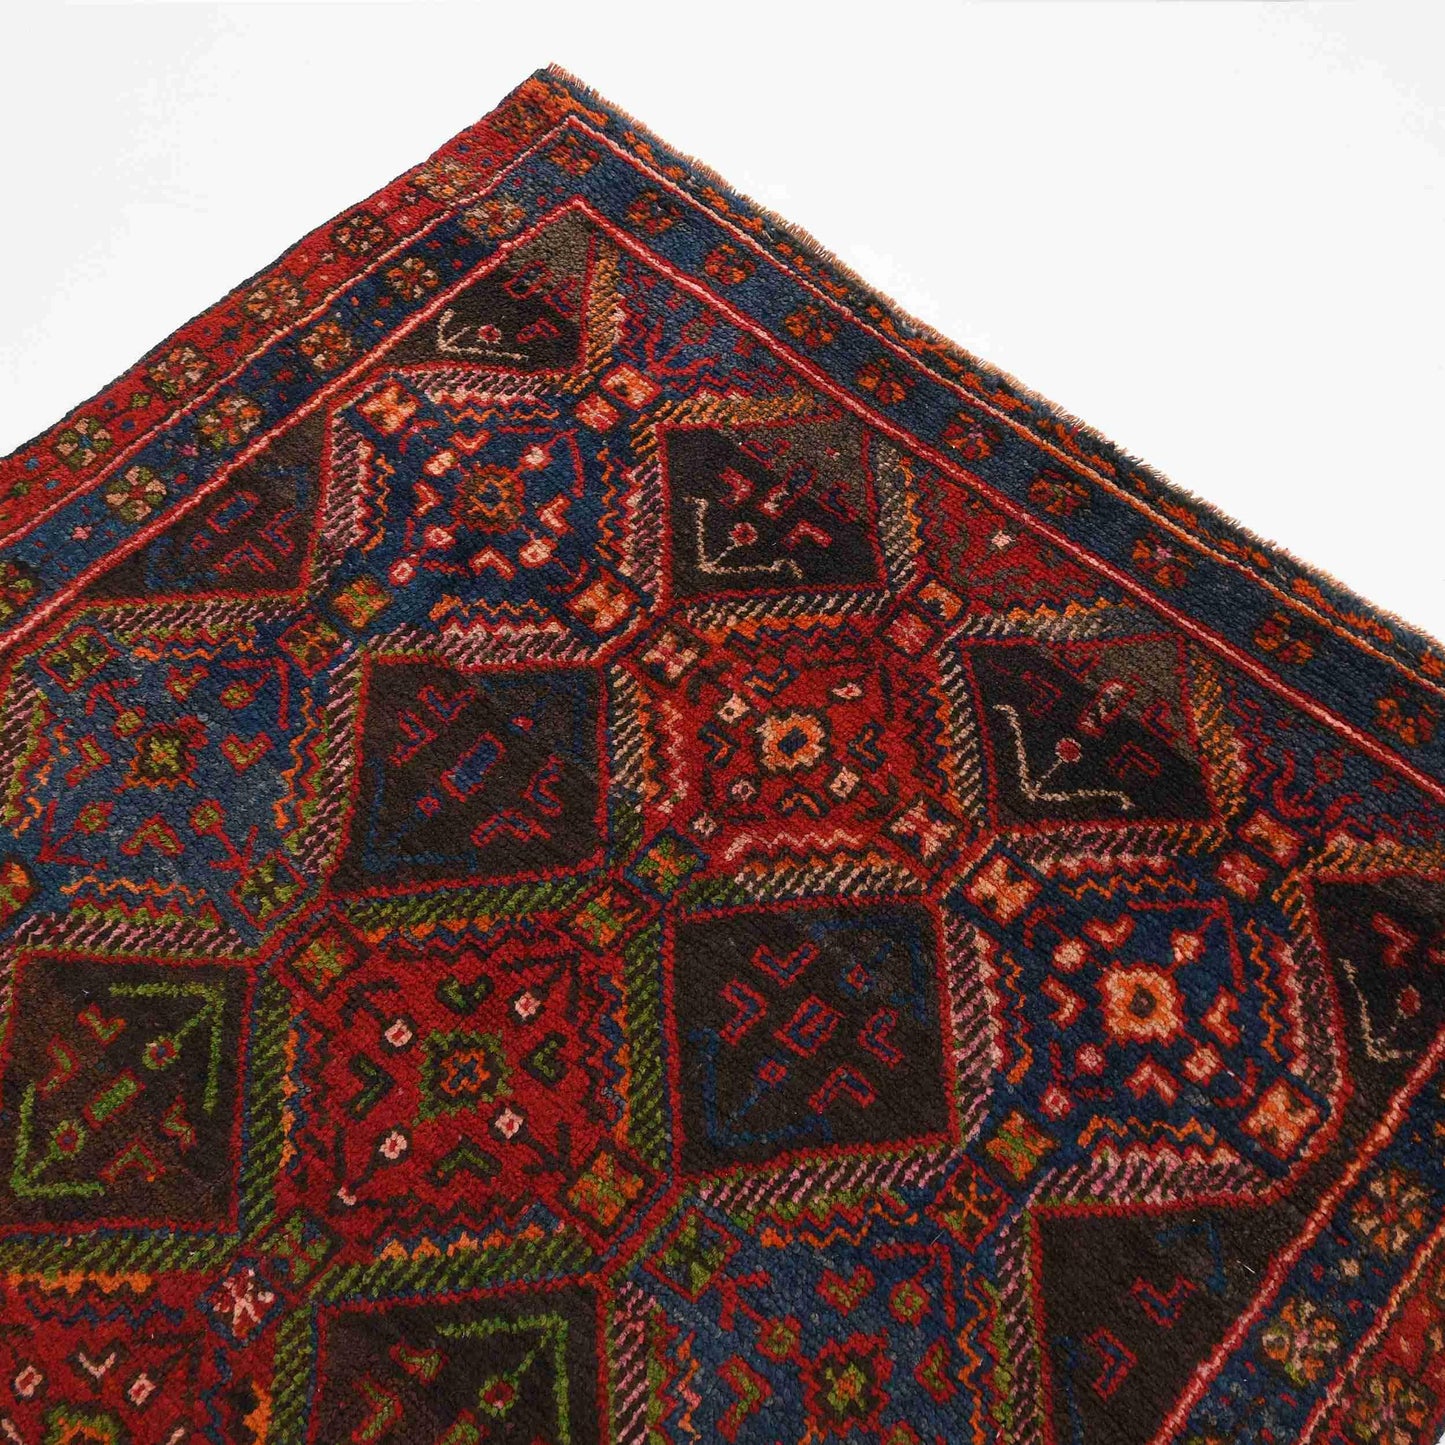 Carpet Hand Woven Anatolian Wool On Wool Authentic Unique Original 146 X 356 Cm - 4' 10'' X 11' 9'' Red C014 ER23